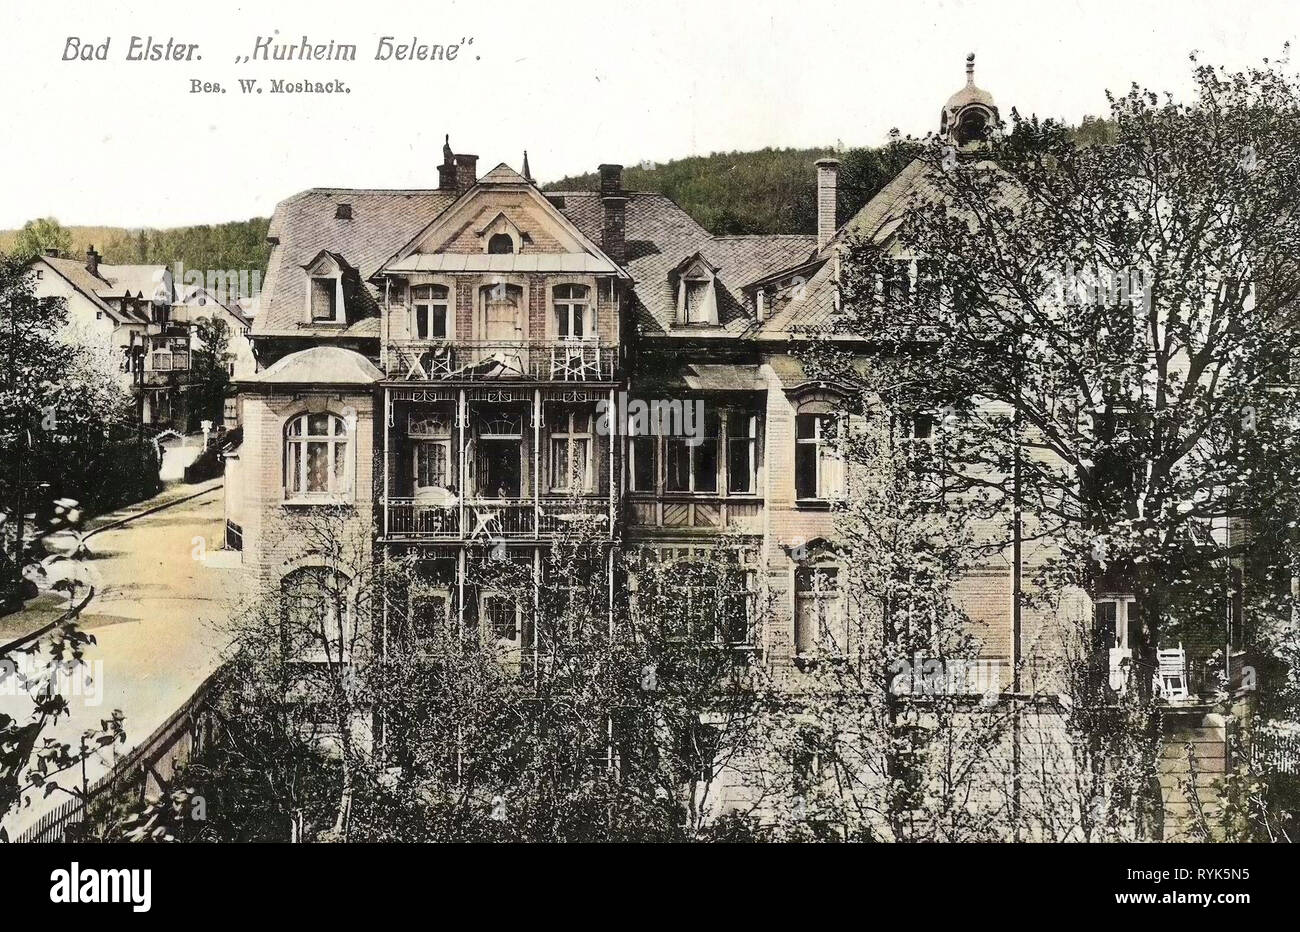 Bâtiments de Bad Elster, bâtiments Spa en Saxe, 1916, Vogtlandkreis, Bad Elster, Kurheim Helene, Allemagne Banque D'Images